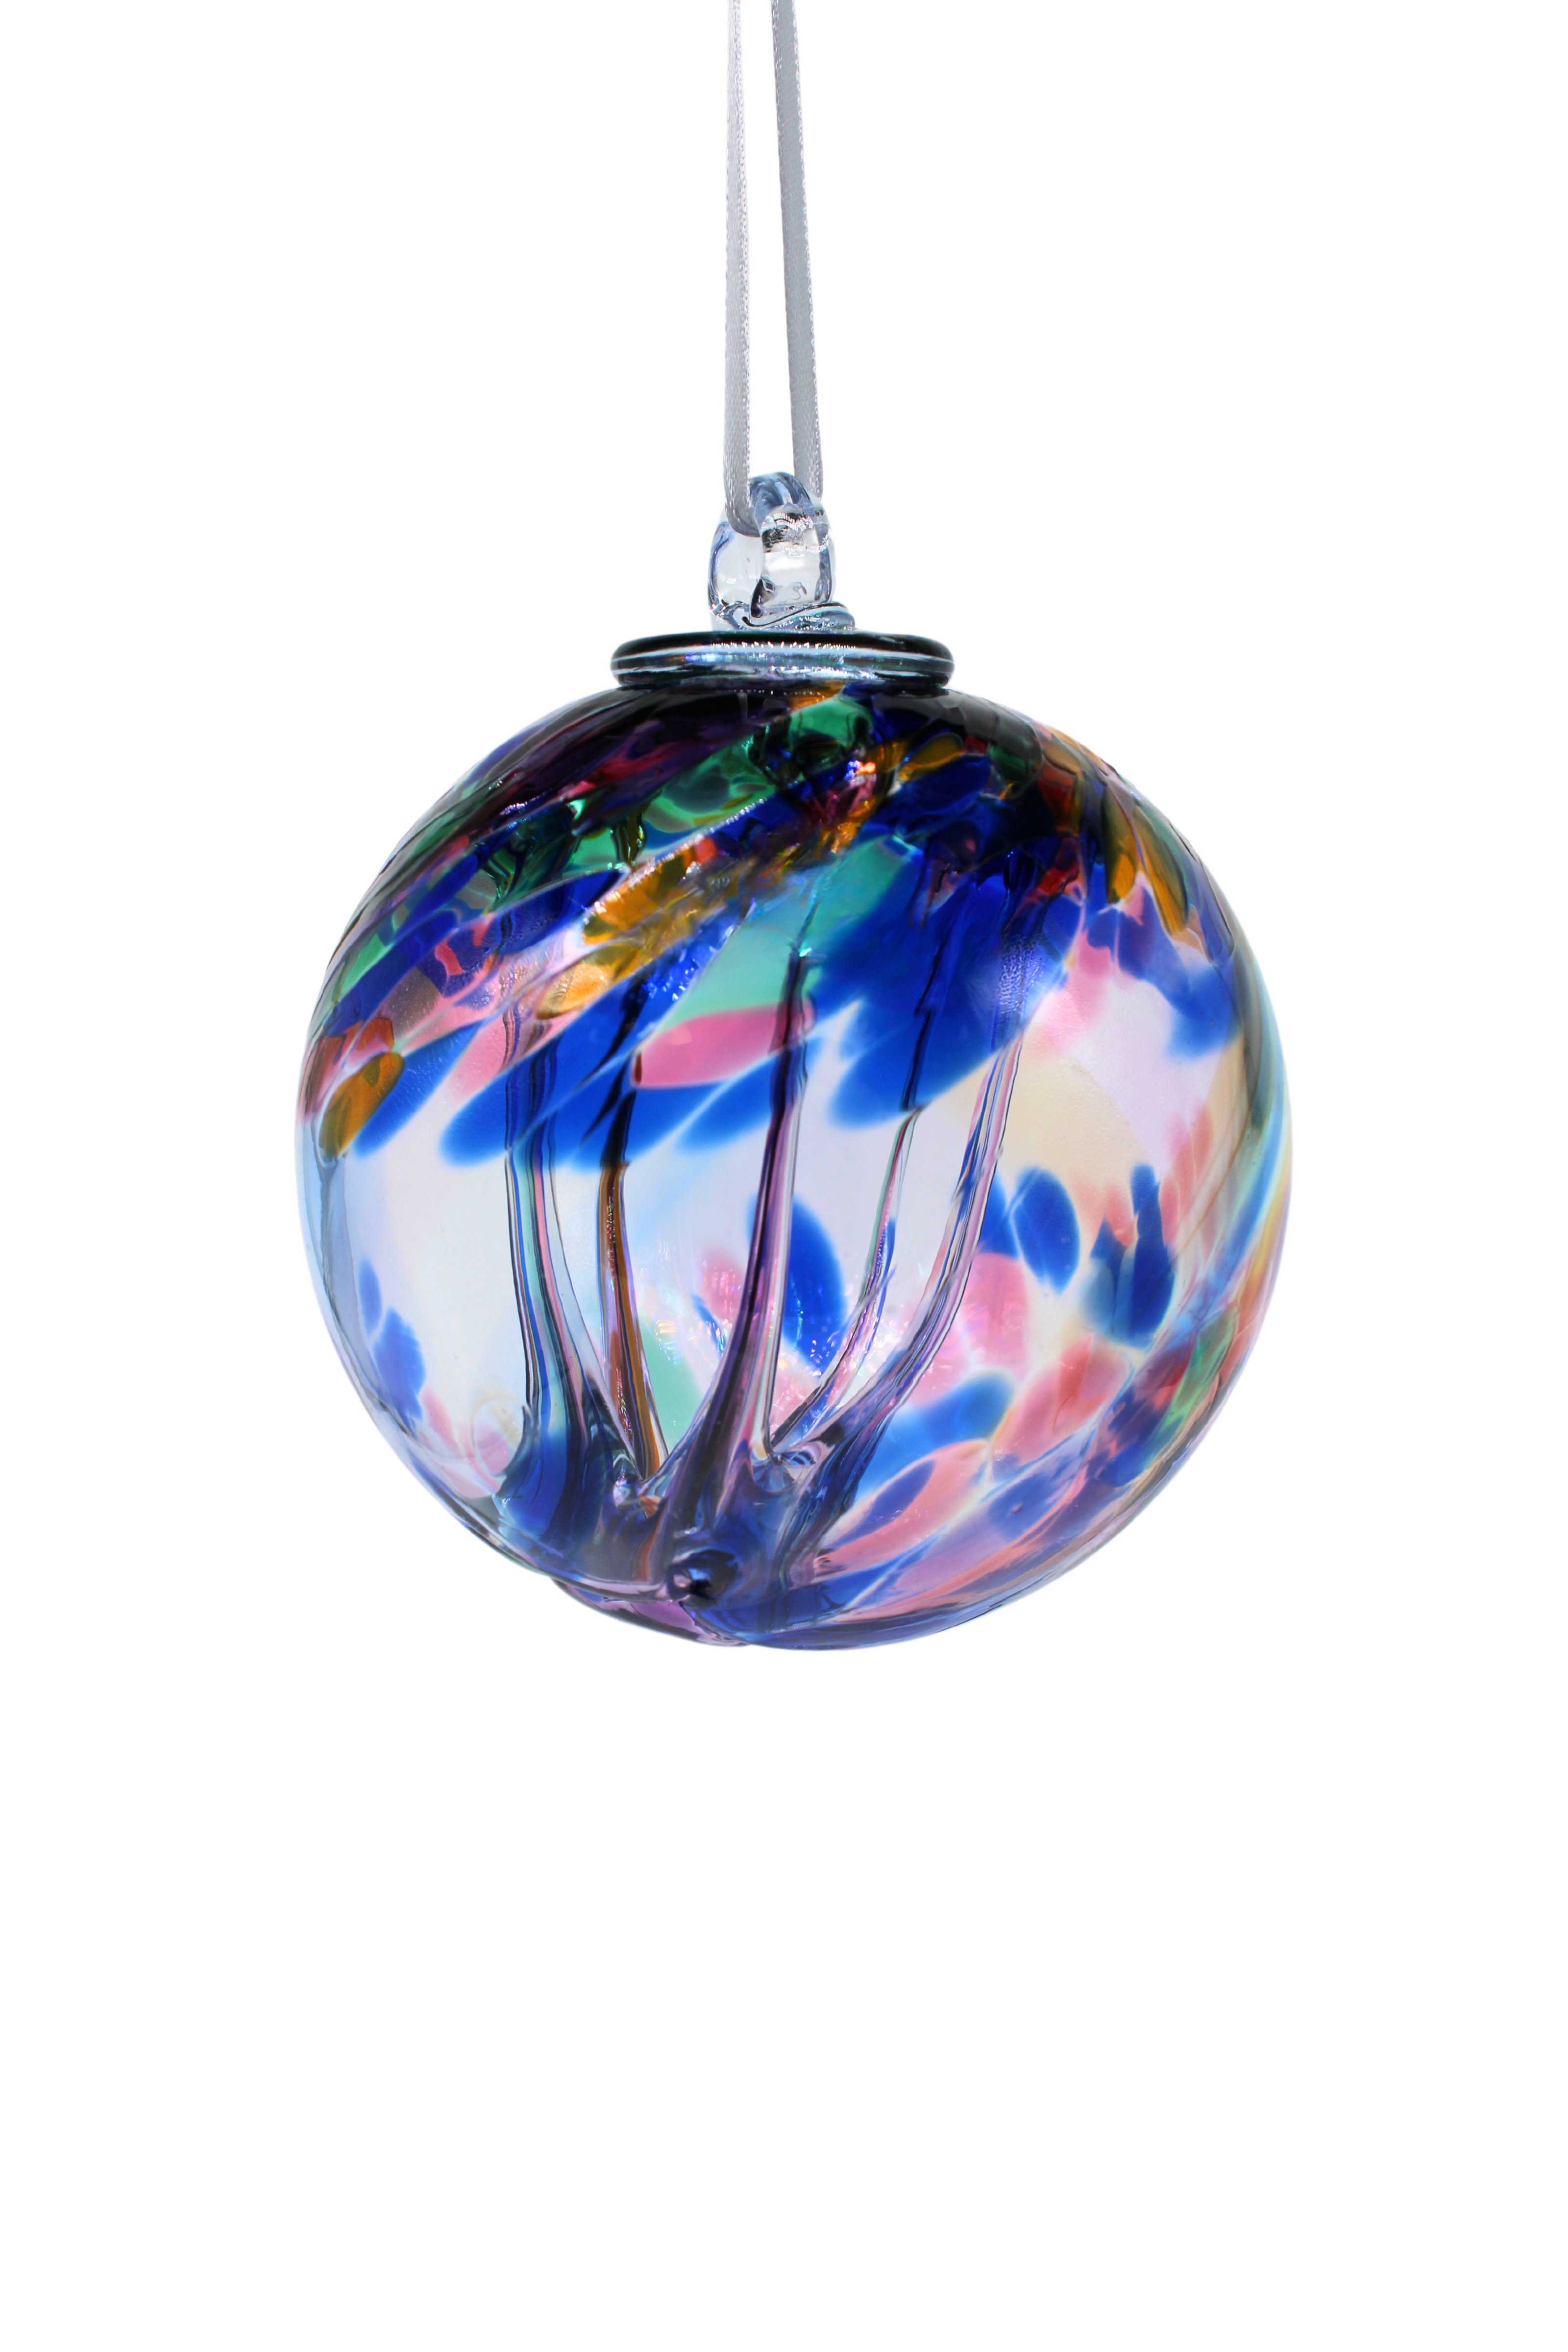 10cm Spirit Ball - I'm Sorry - Multicoloured Blue